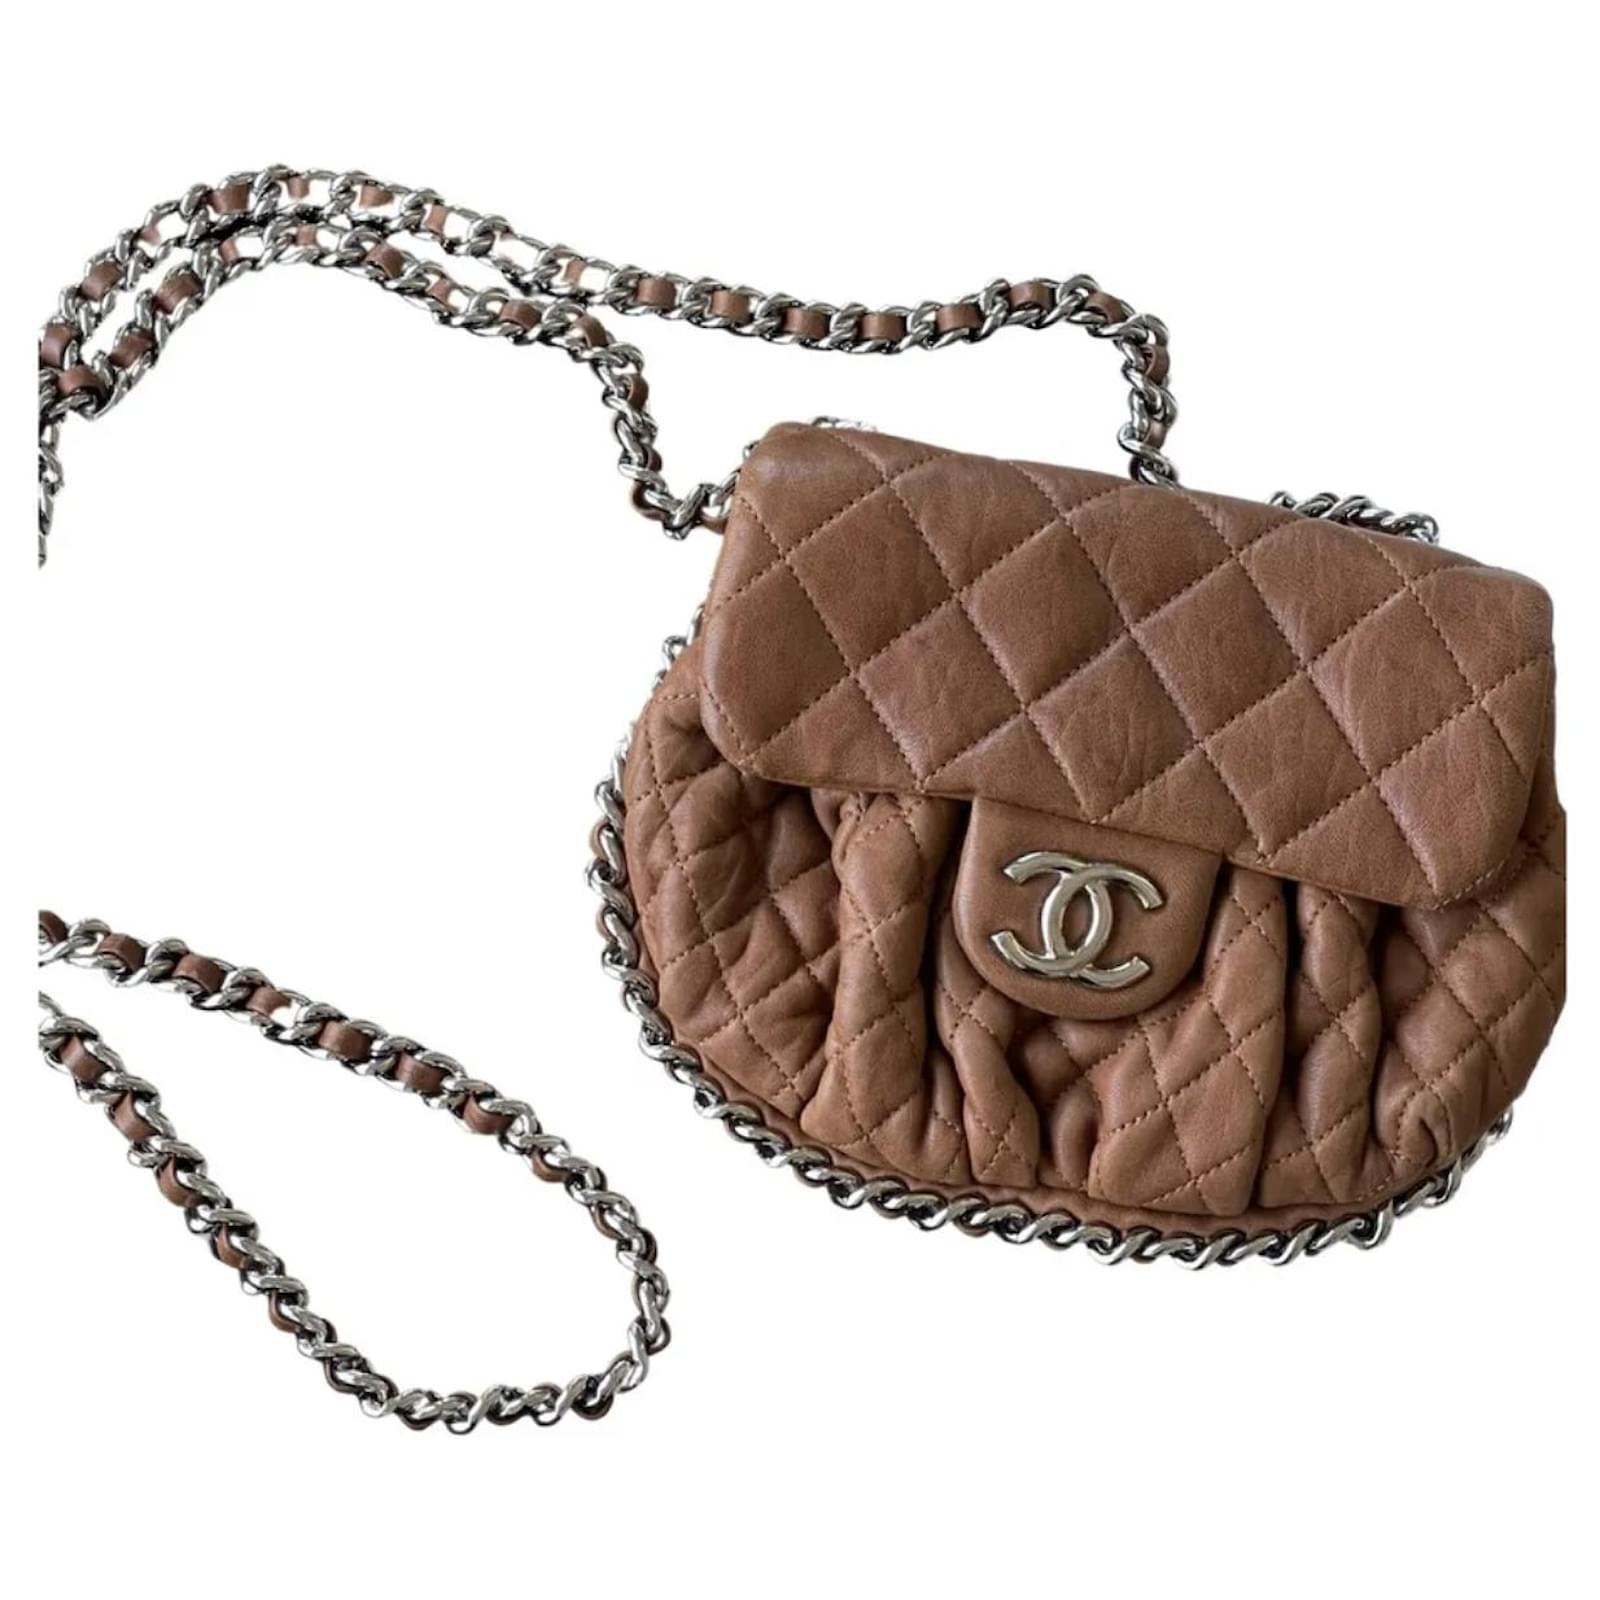 Chanel Chain Around Bag Mini Size In dark beige or camel color.